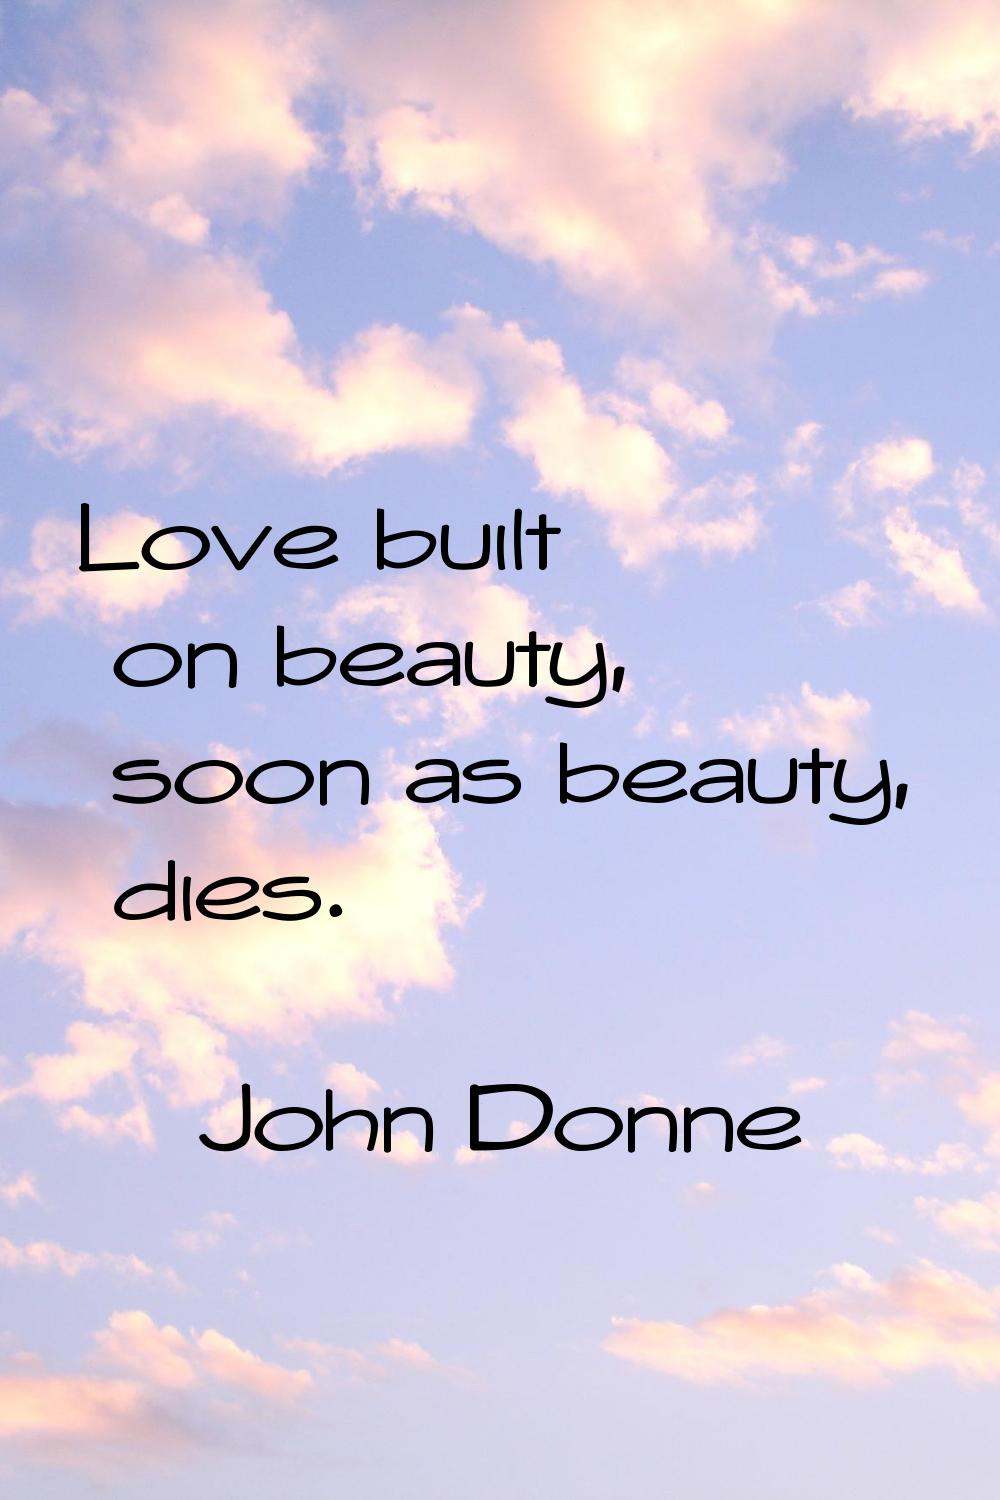 Love built on beauty, soon as beauty, dies.